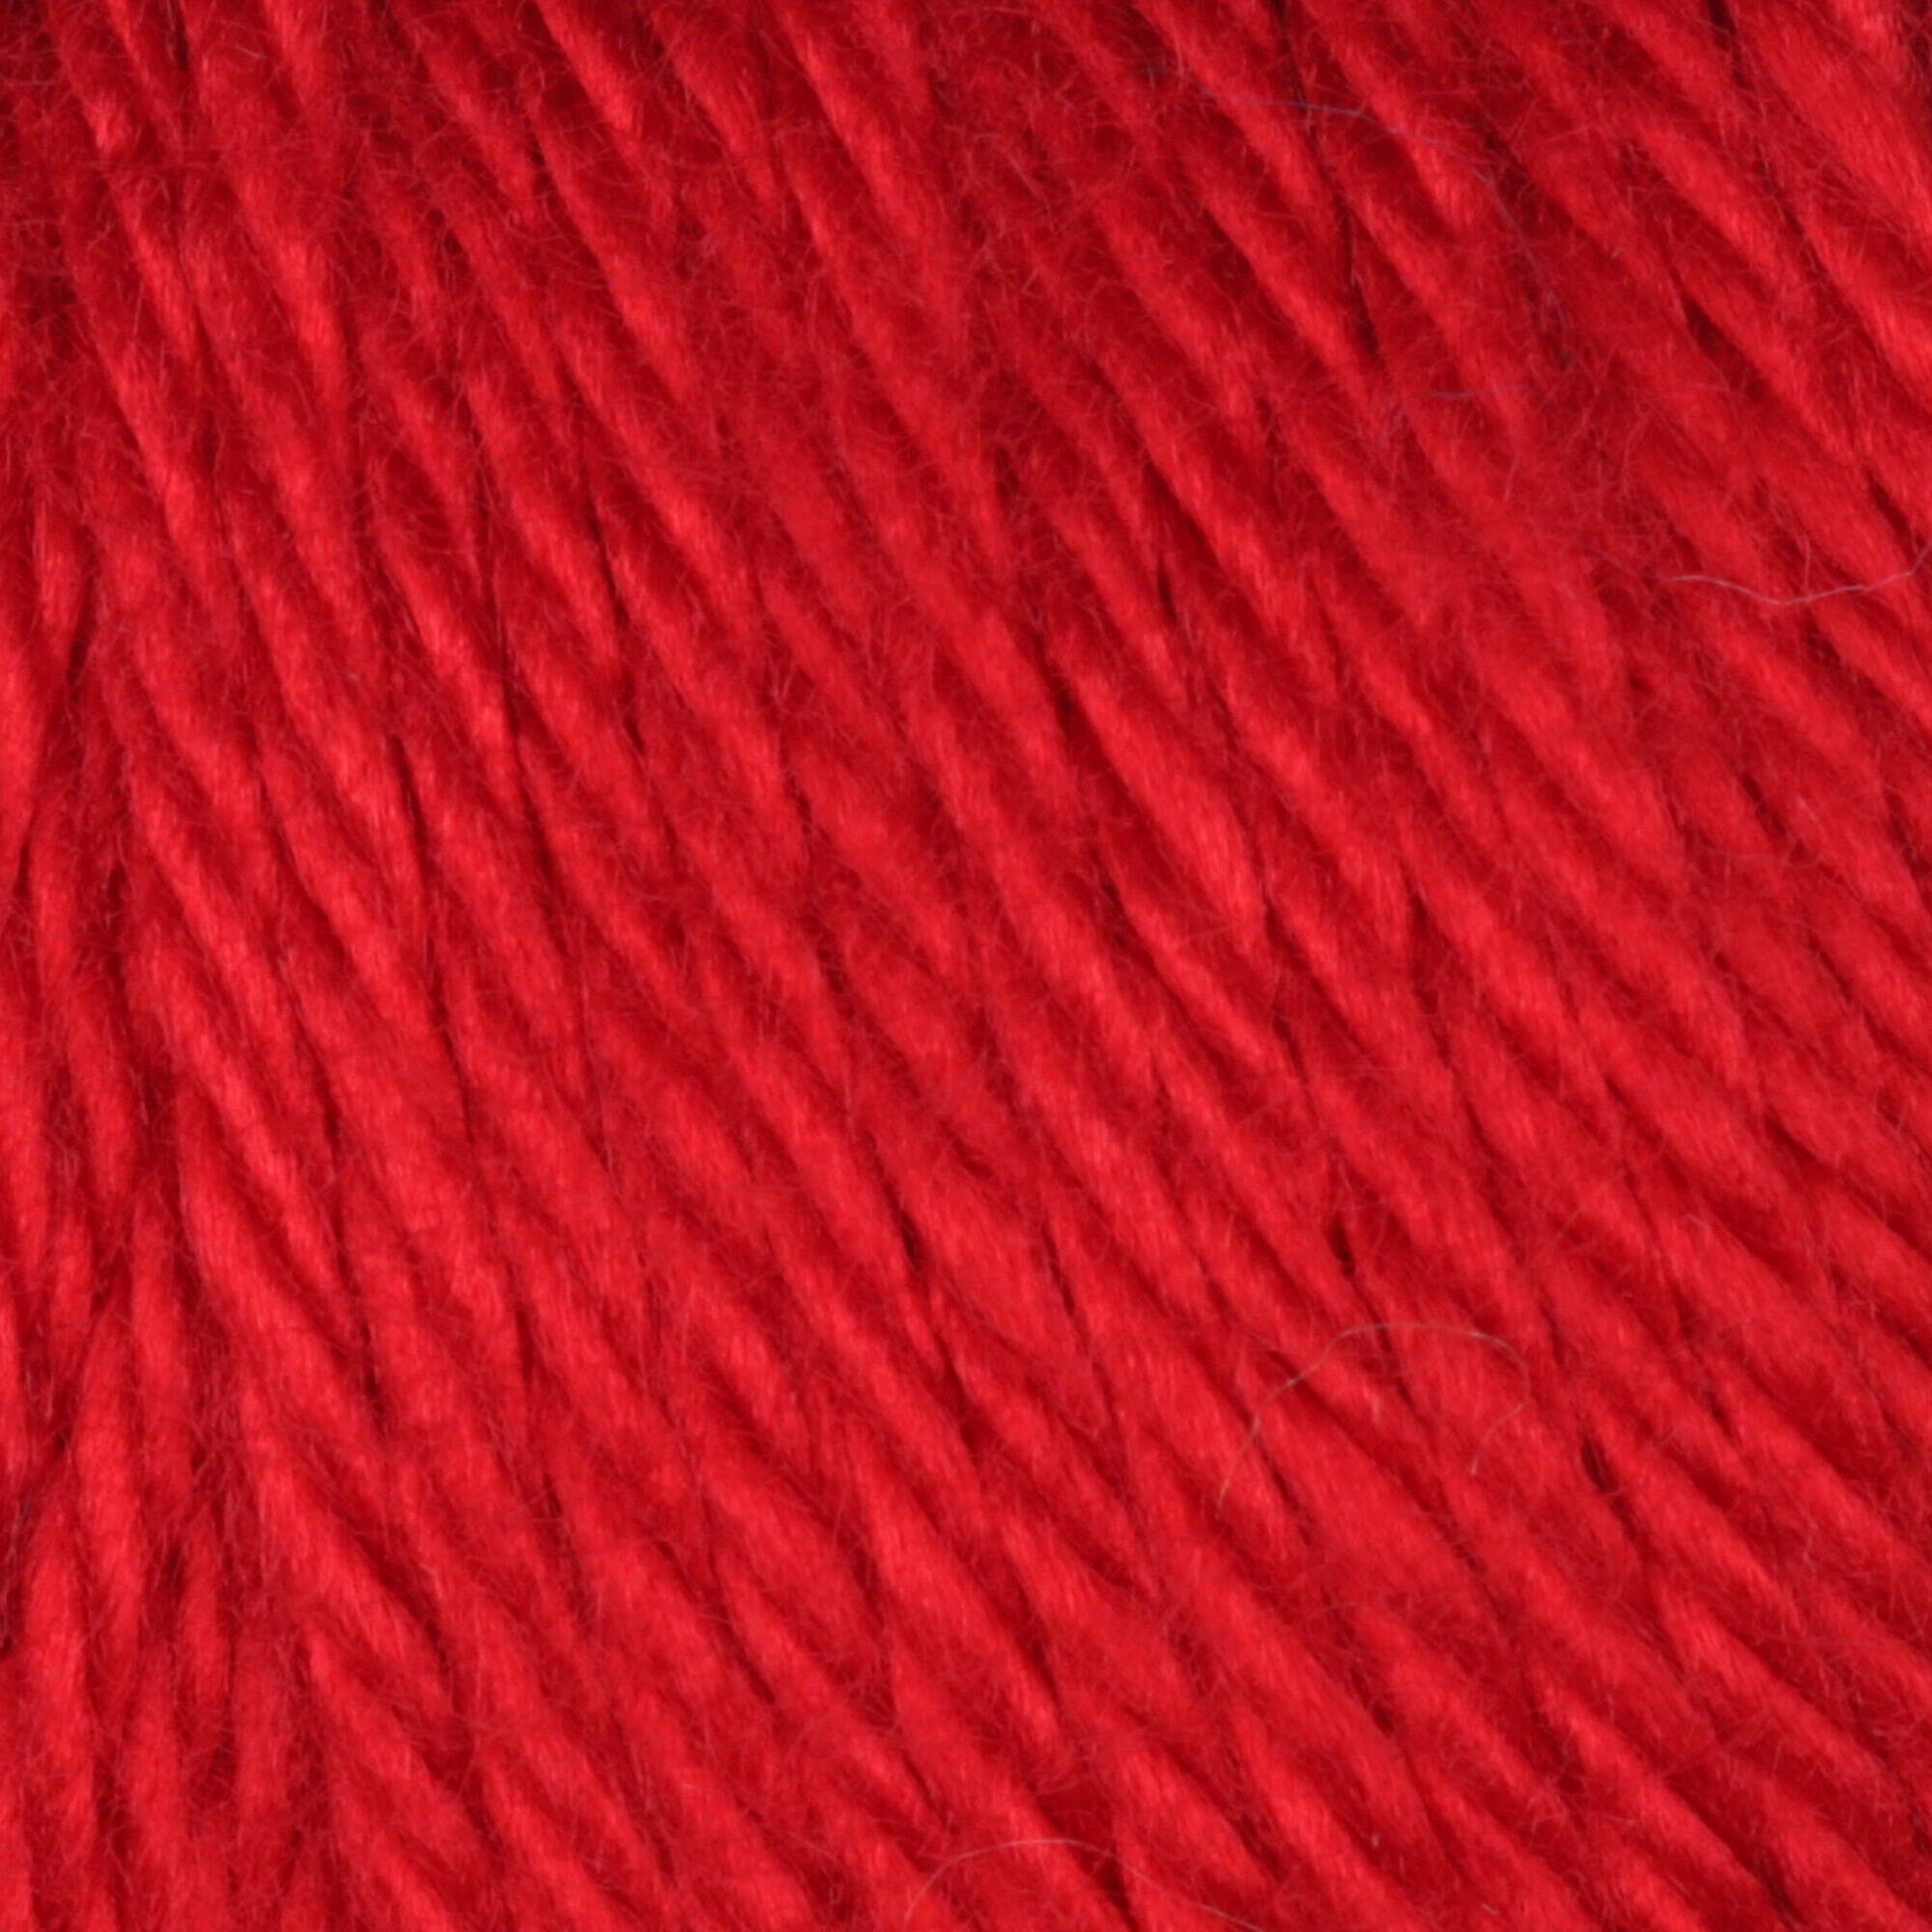 Caron Simply Soft Yarn Harvest Red